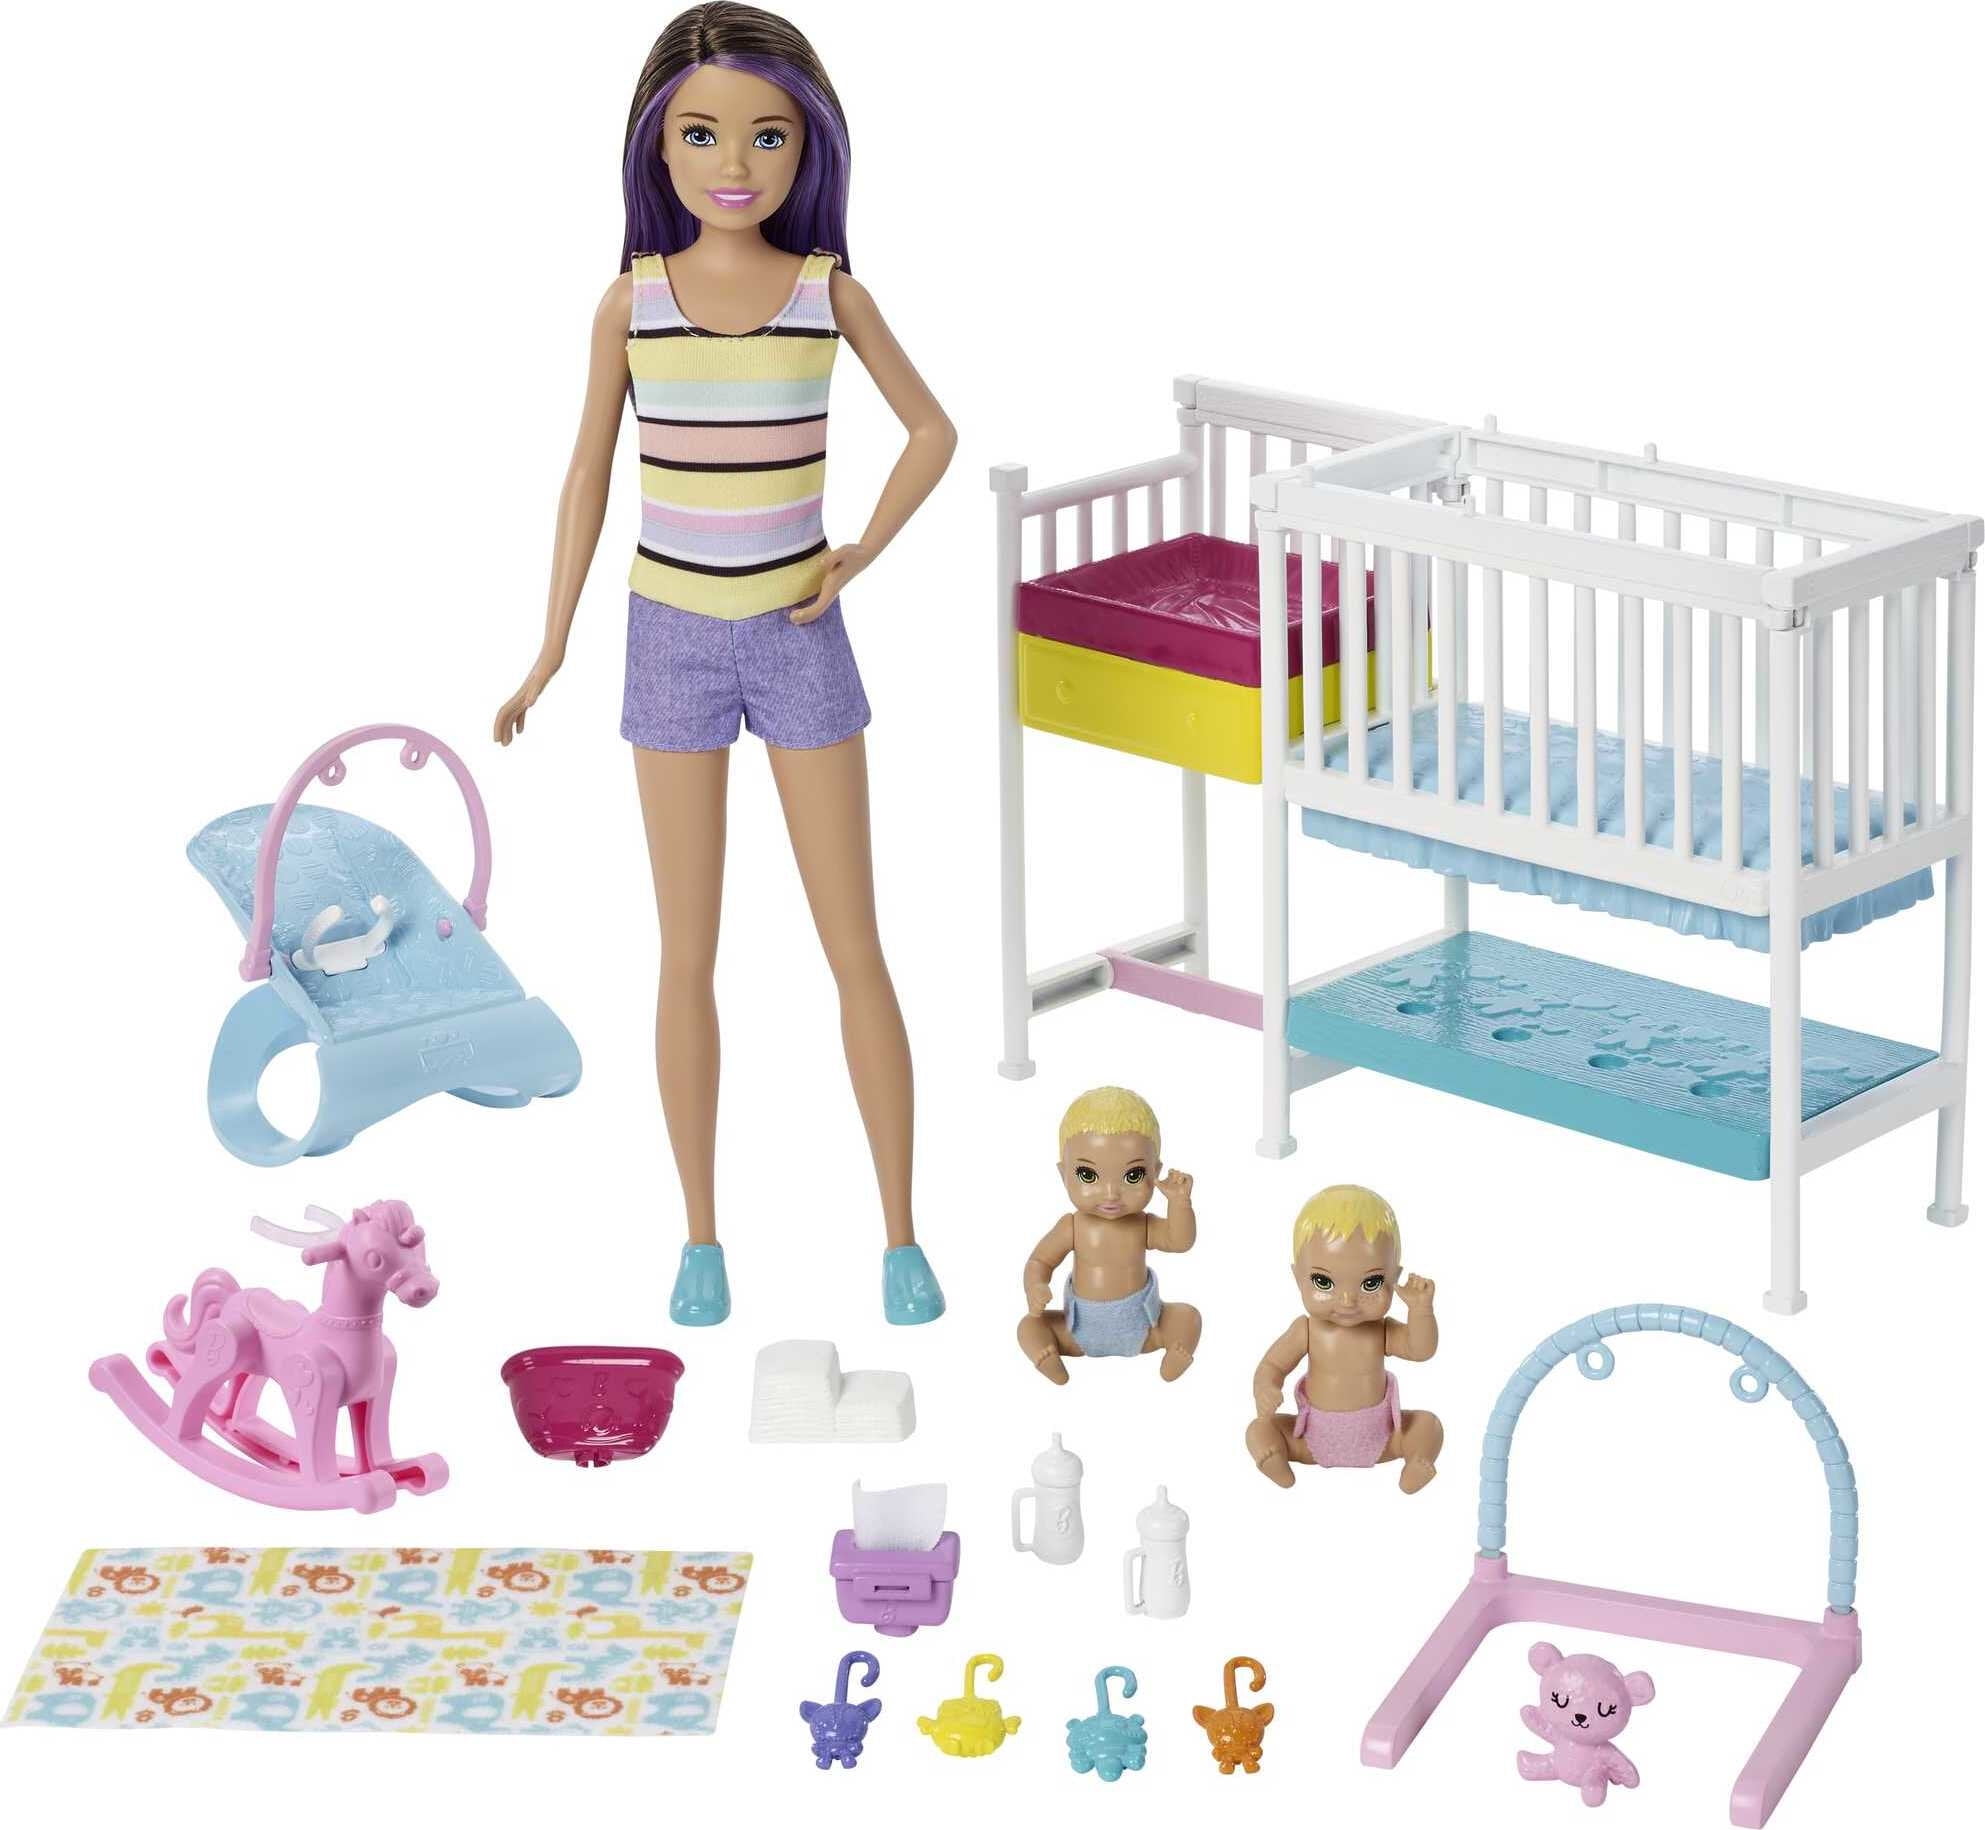 Barbie Babysitters Inc Nap n Nurture Nursery Playset with Doll, Baby & Accessories - Walmart.com